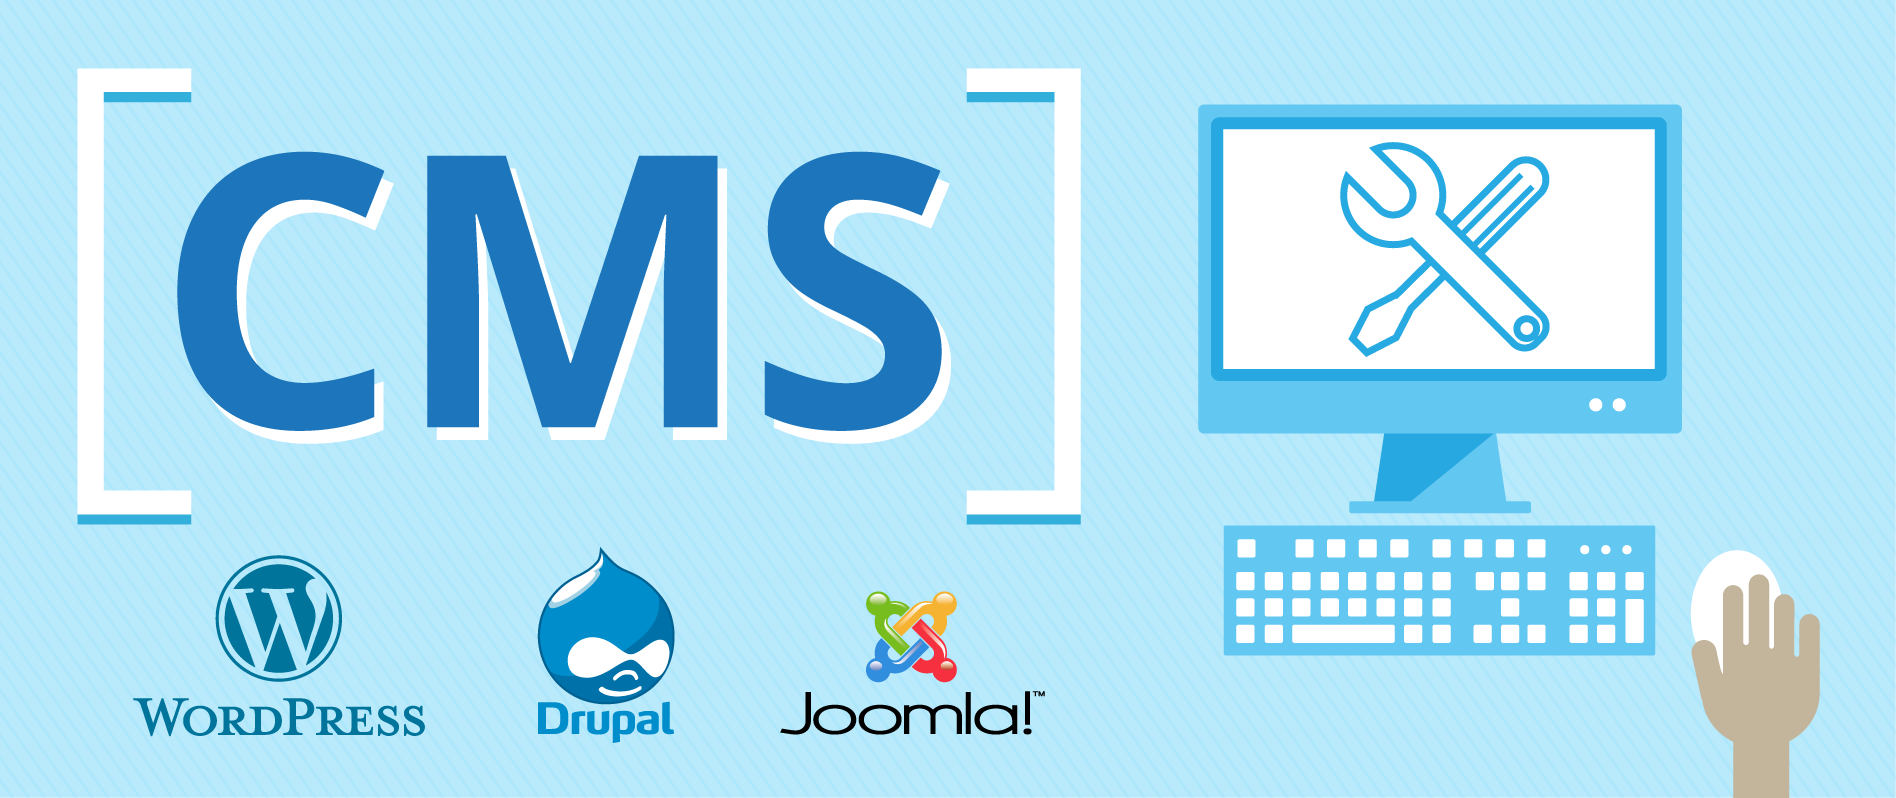 Joomla! The Best CMS in Web Design Industry